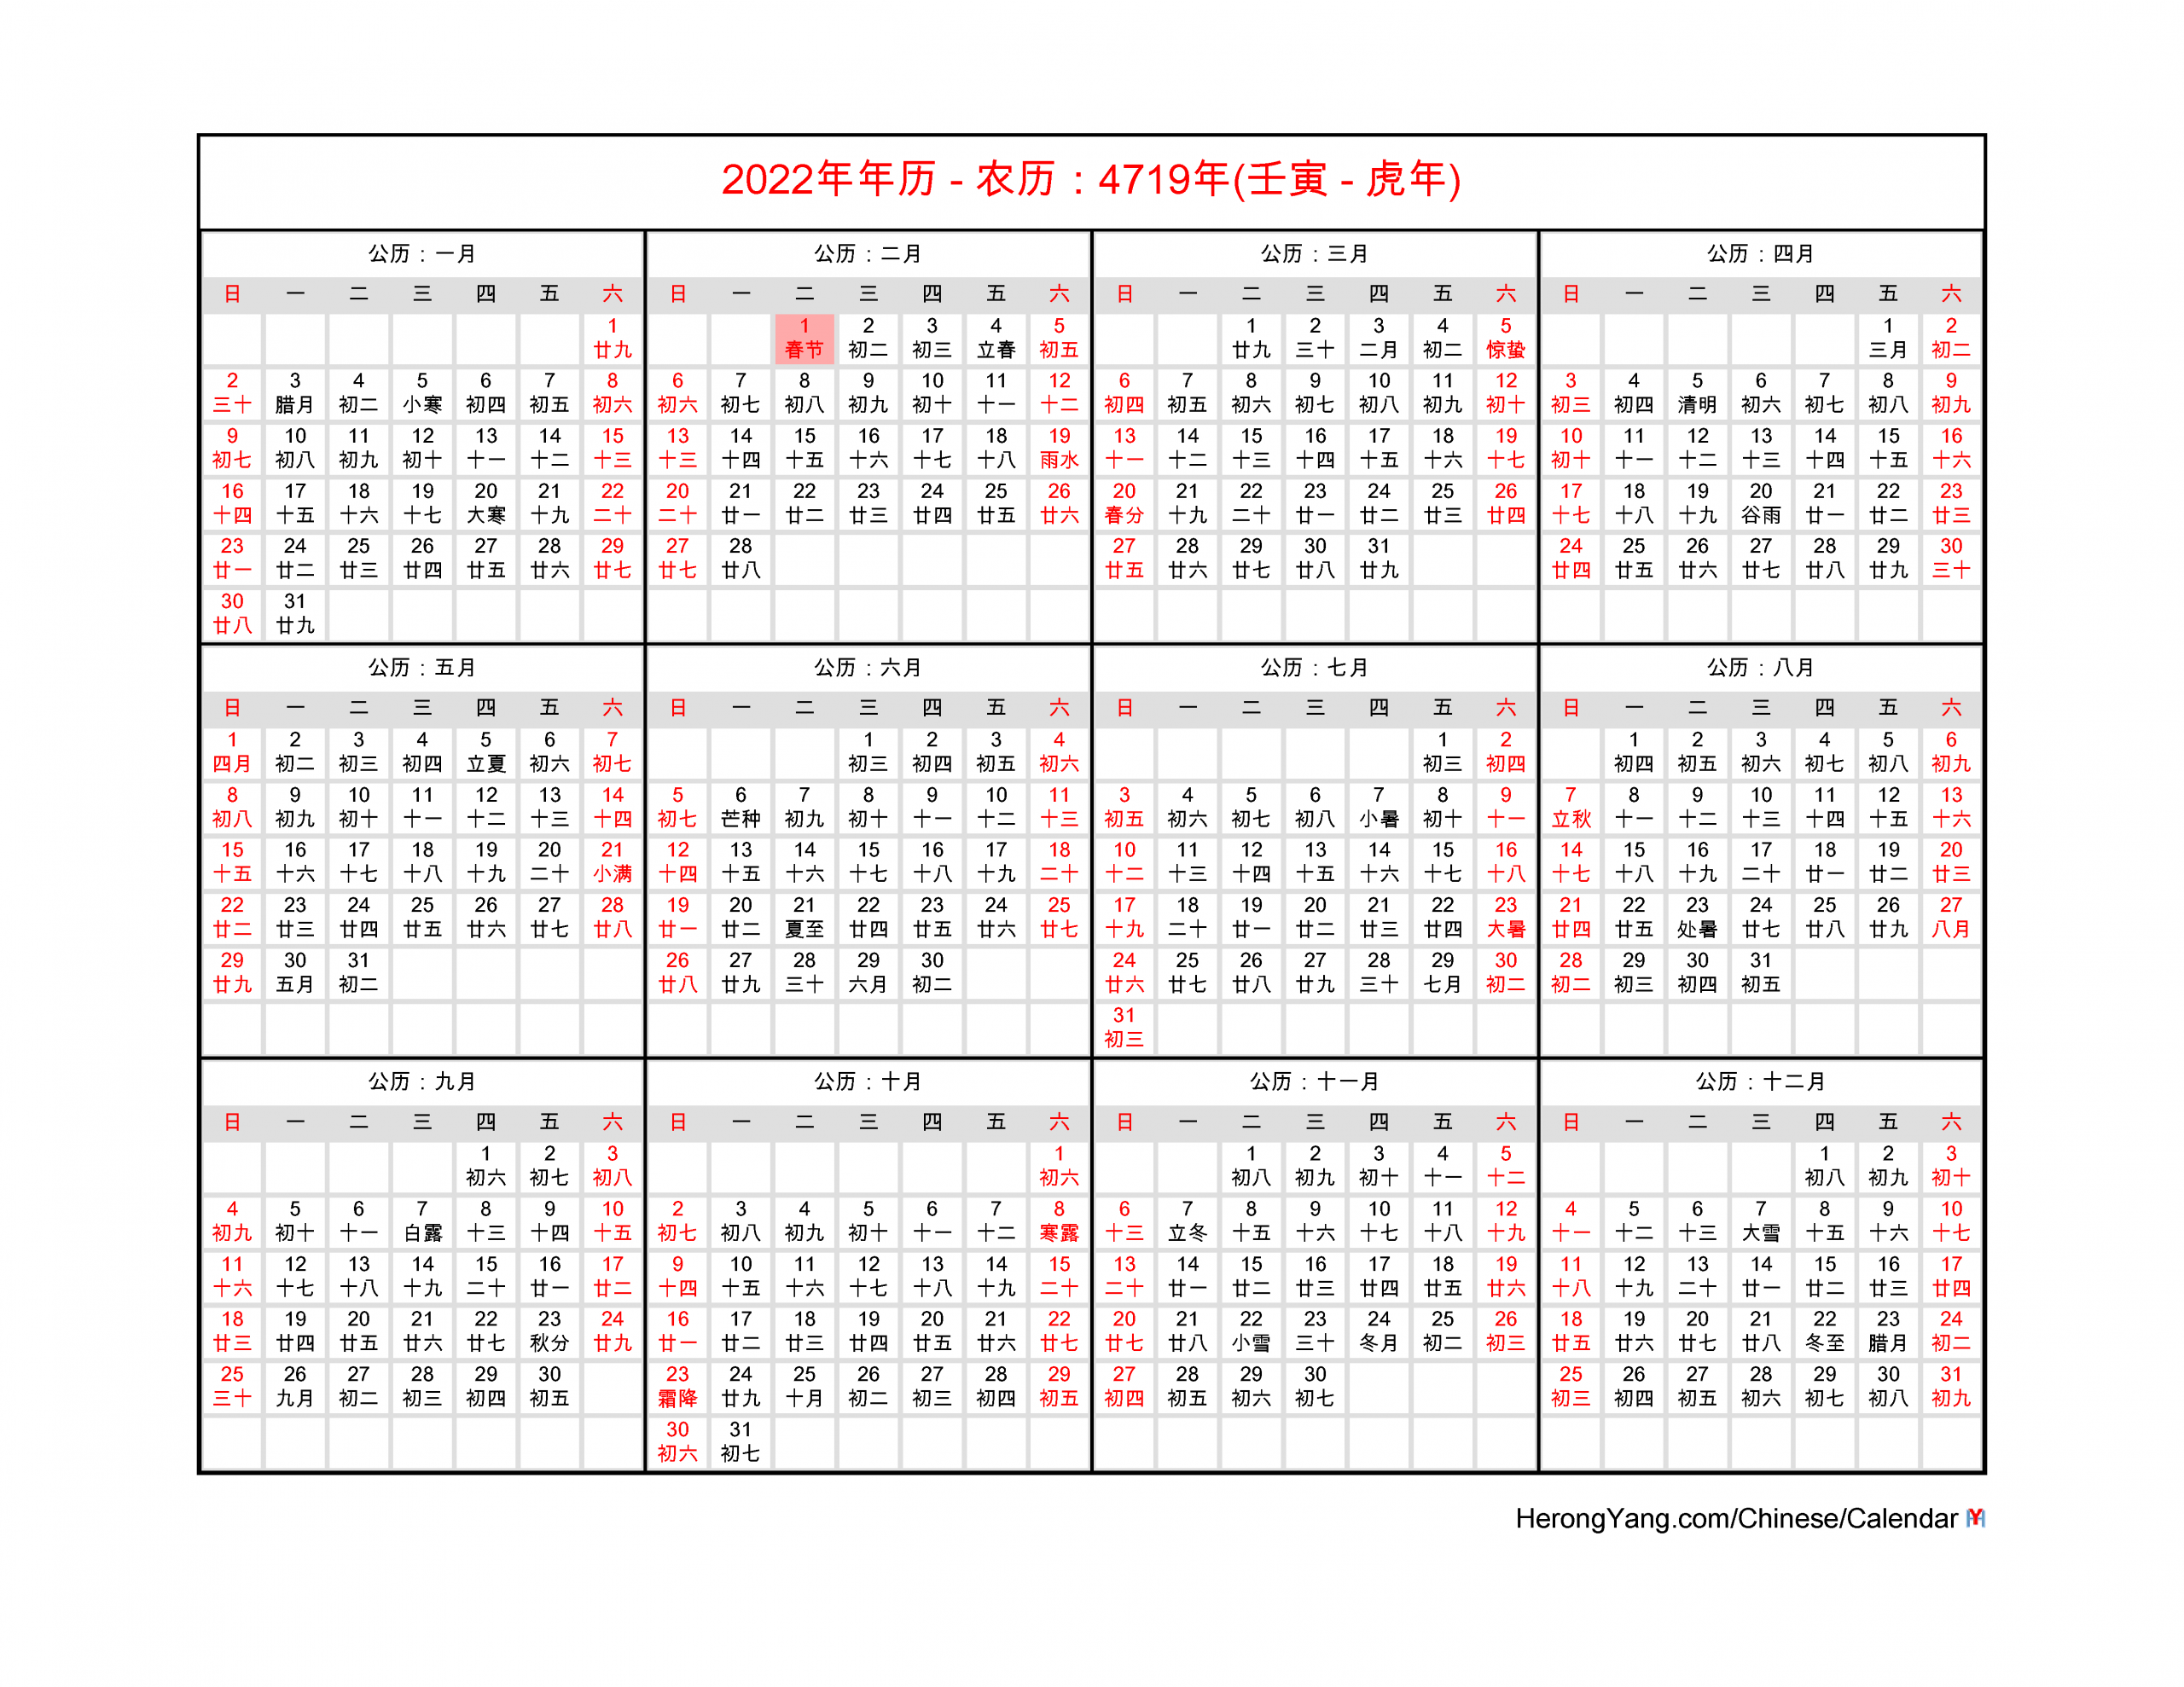 Lunar Calendar 2022 Year Of The